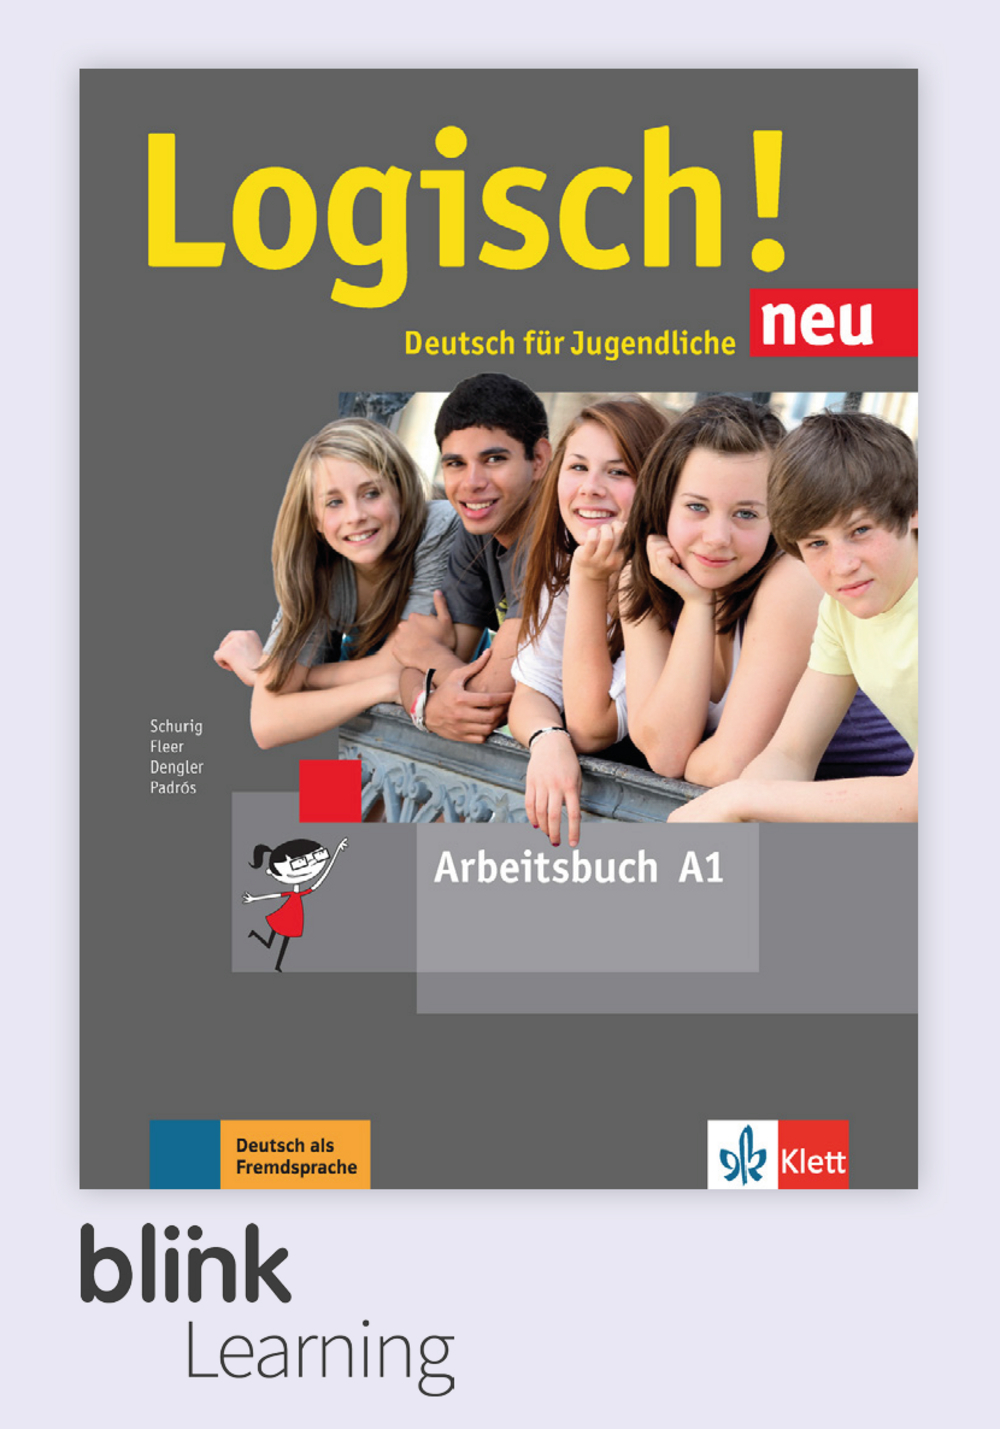 Logisch! NEU A1 Digital Arbeitsbuch für Unterrichtende / Цифровая рабочая тетрадь для учителя